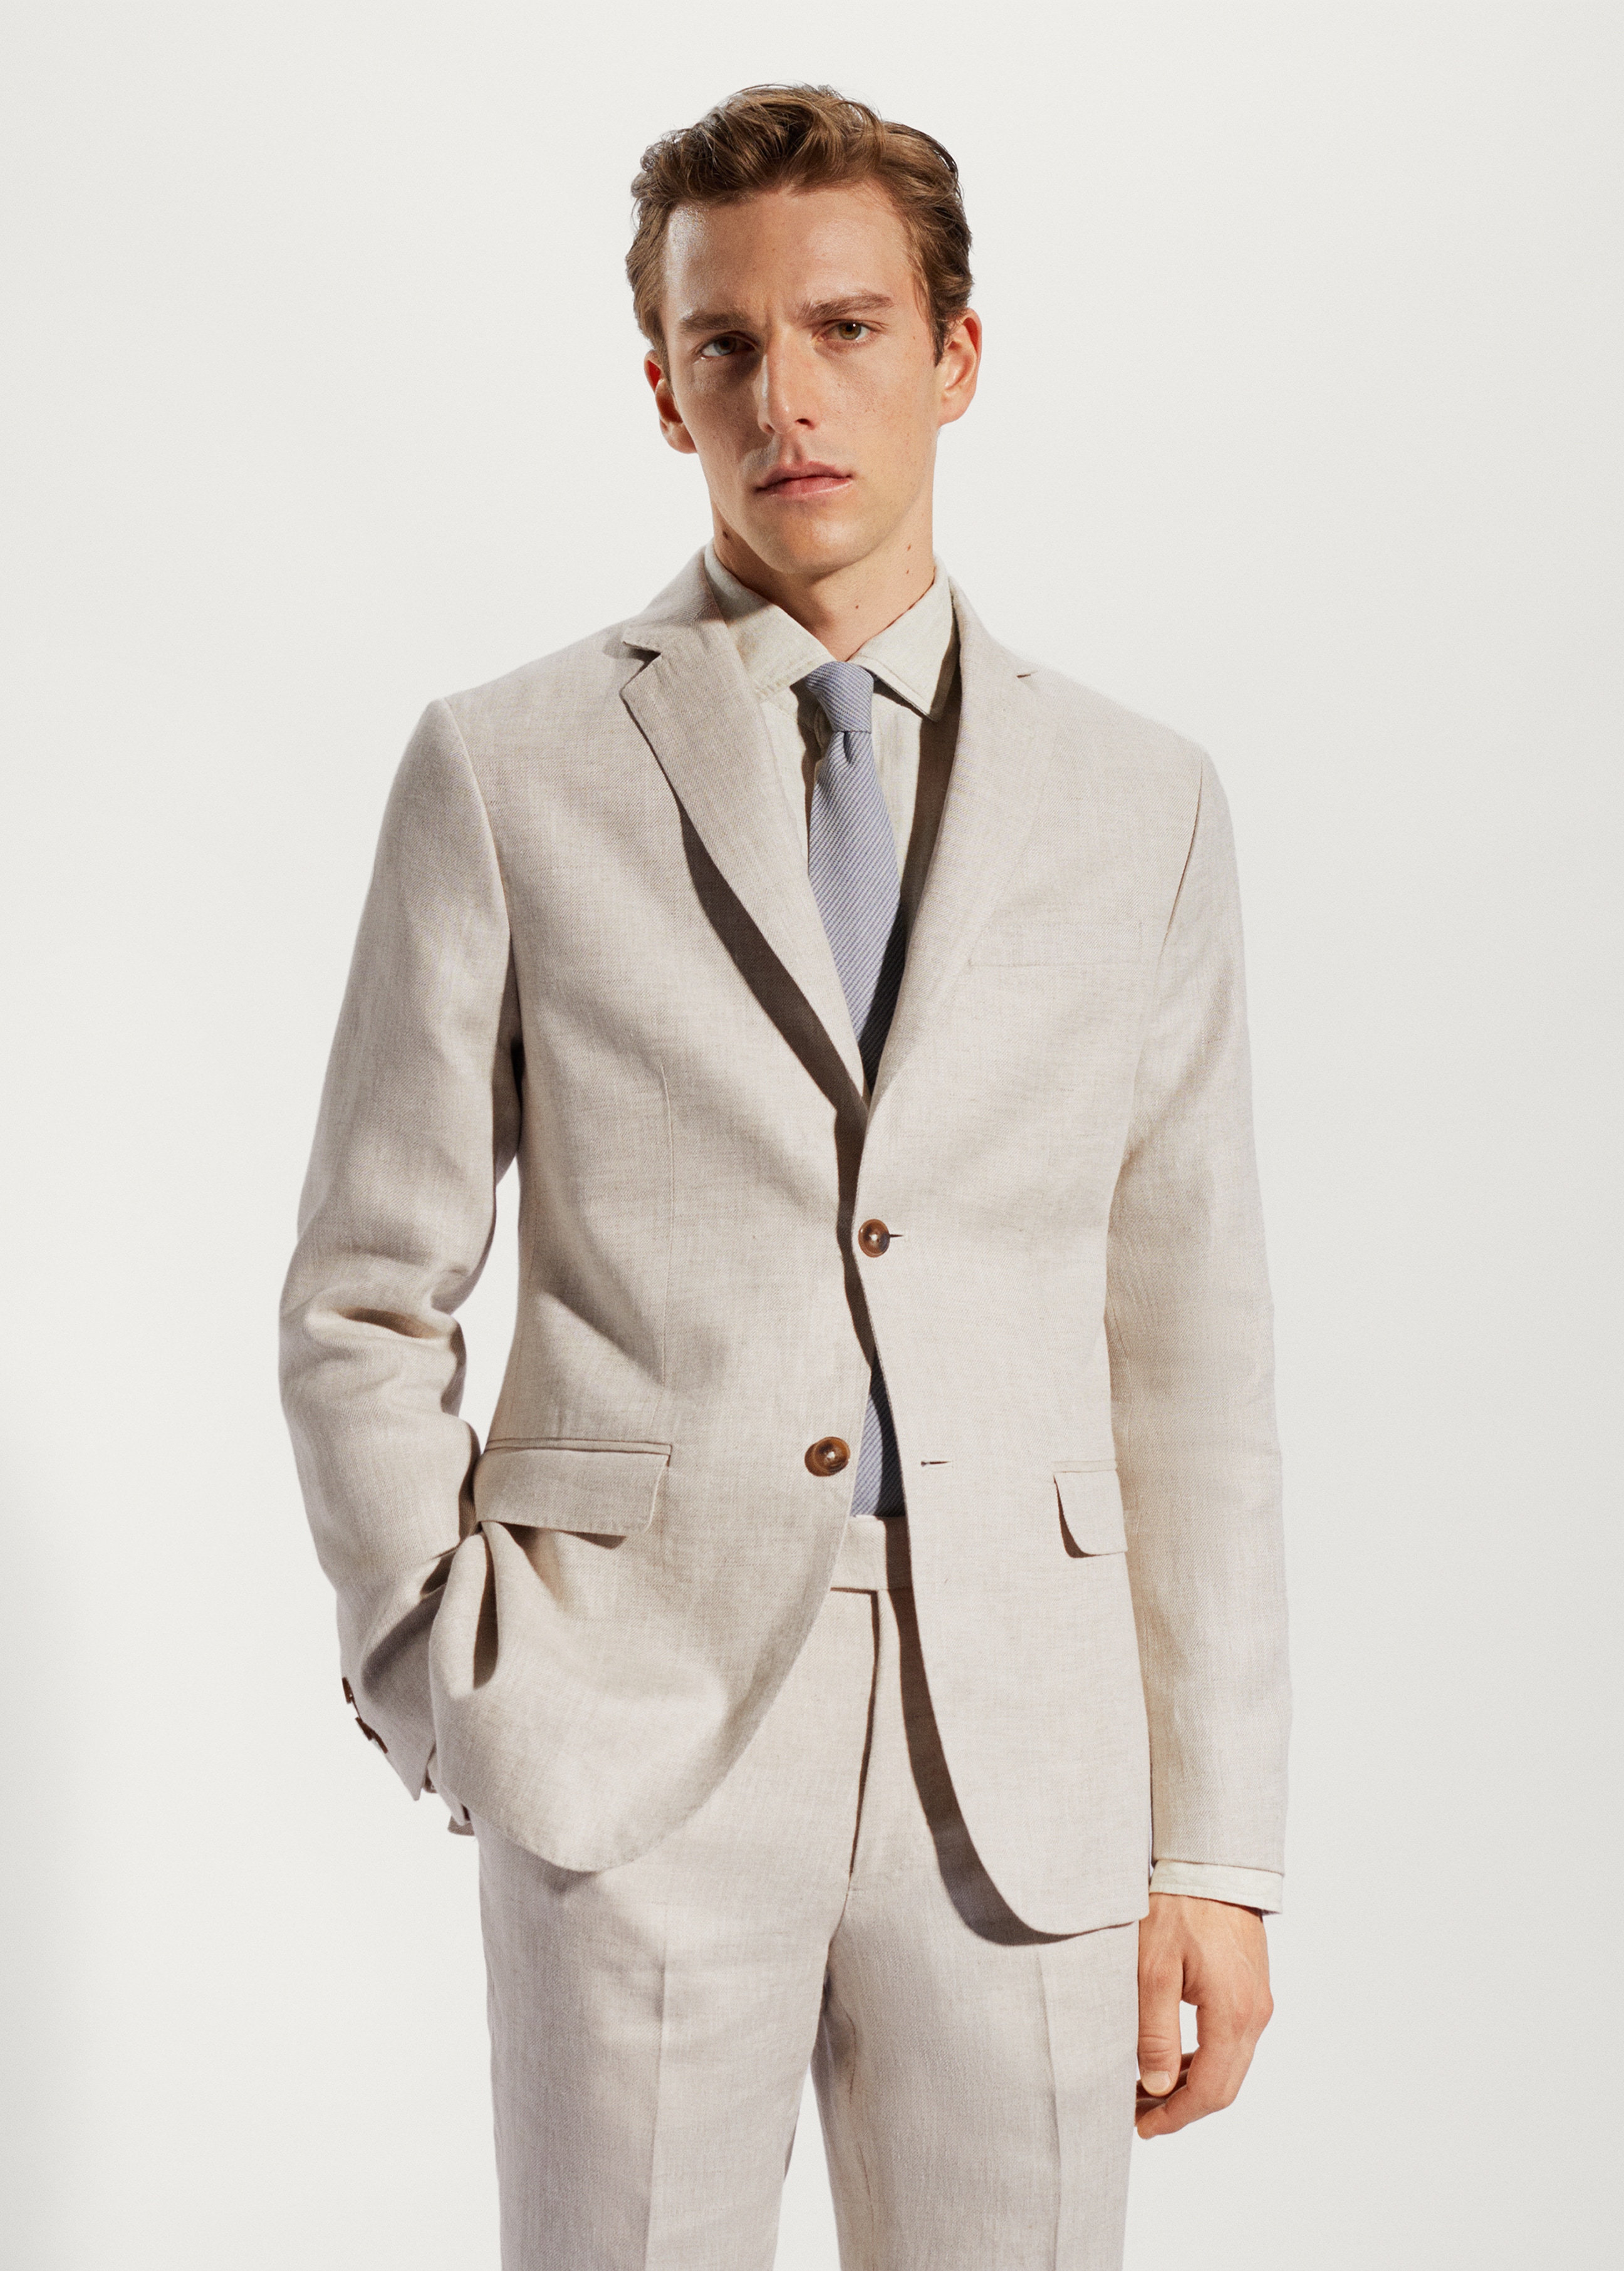 Blazer suit 100% linen - Medium plane